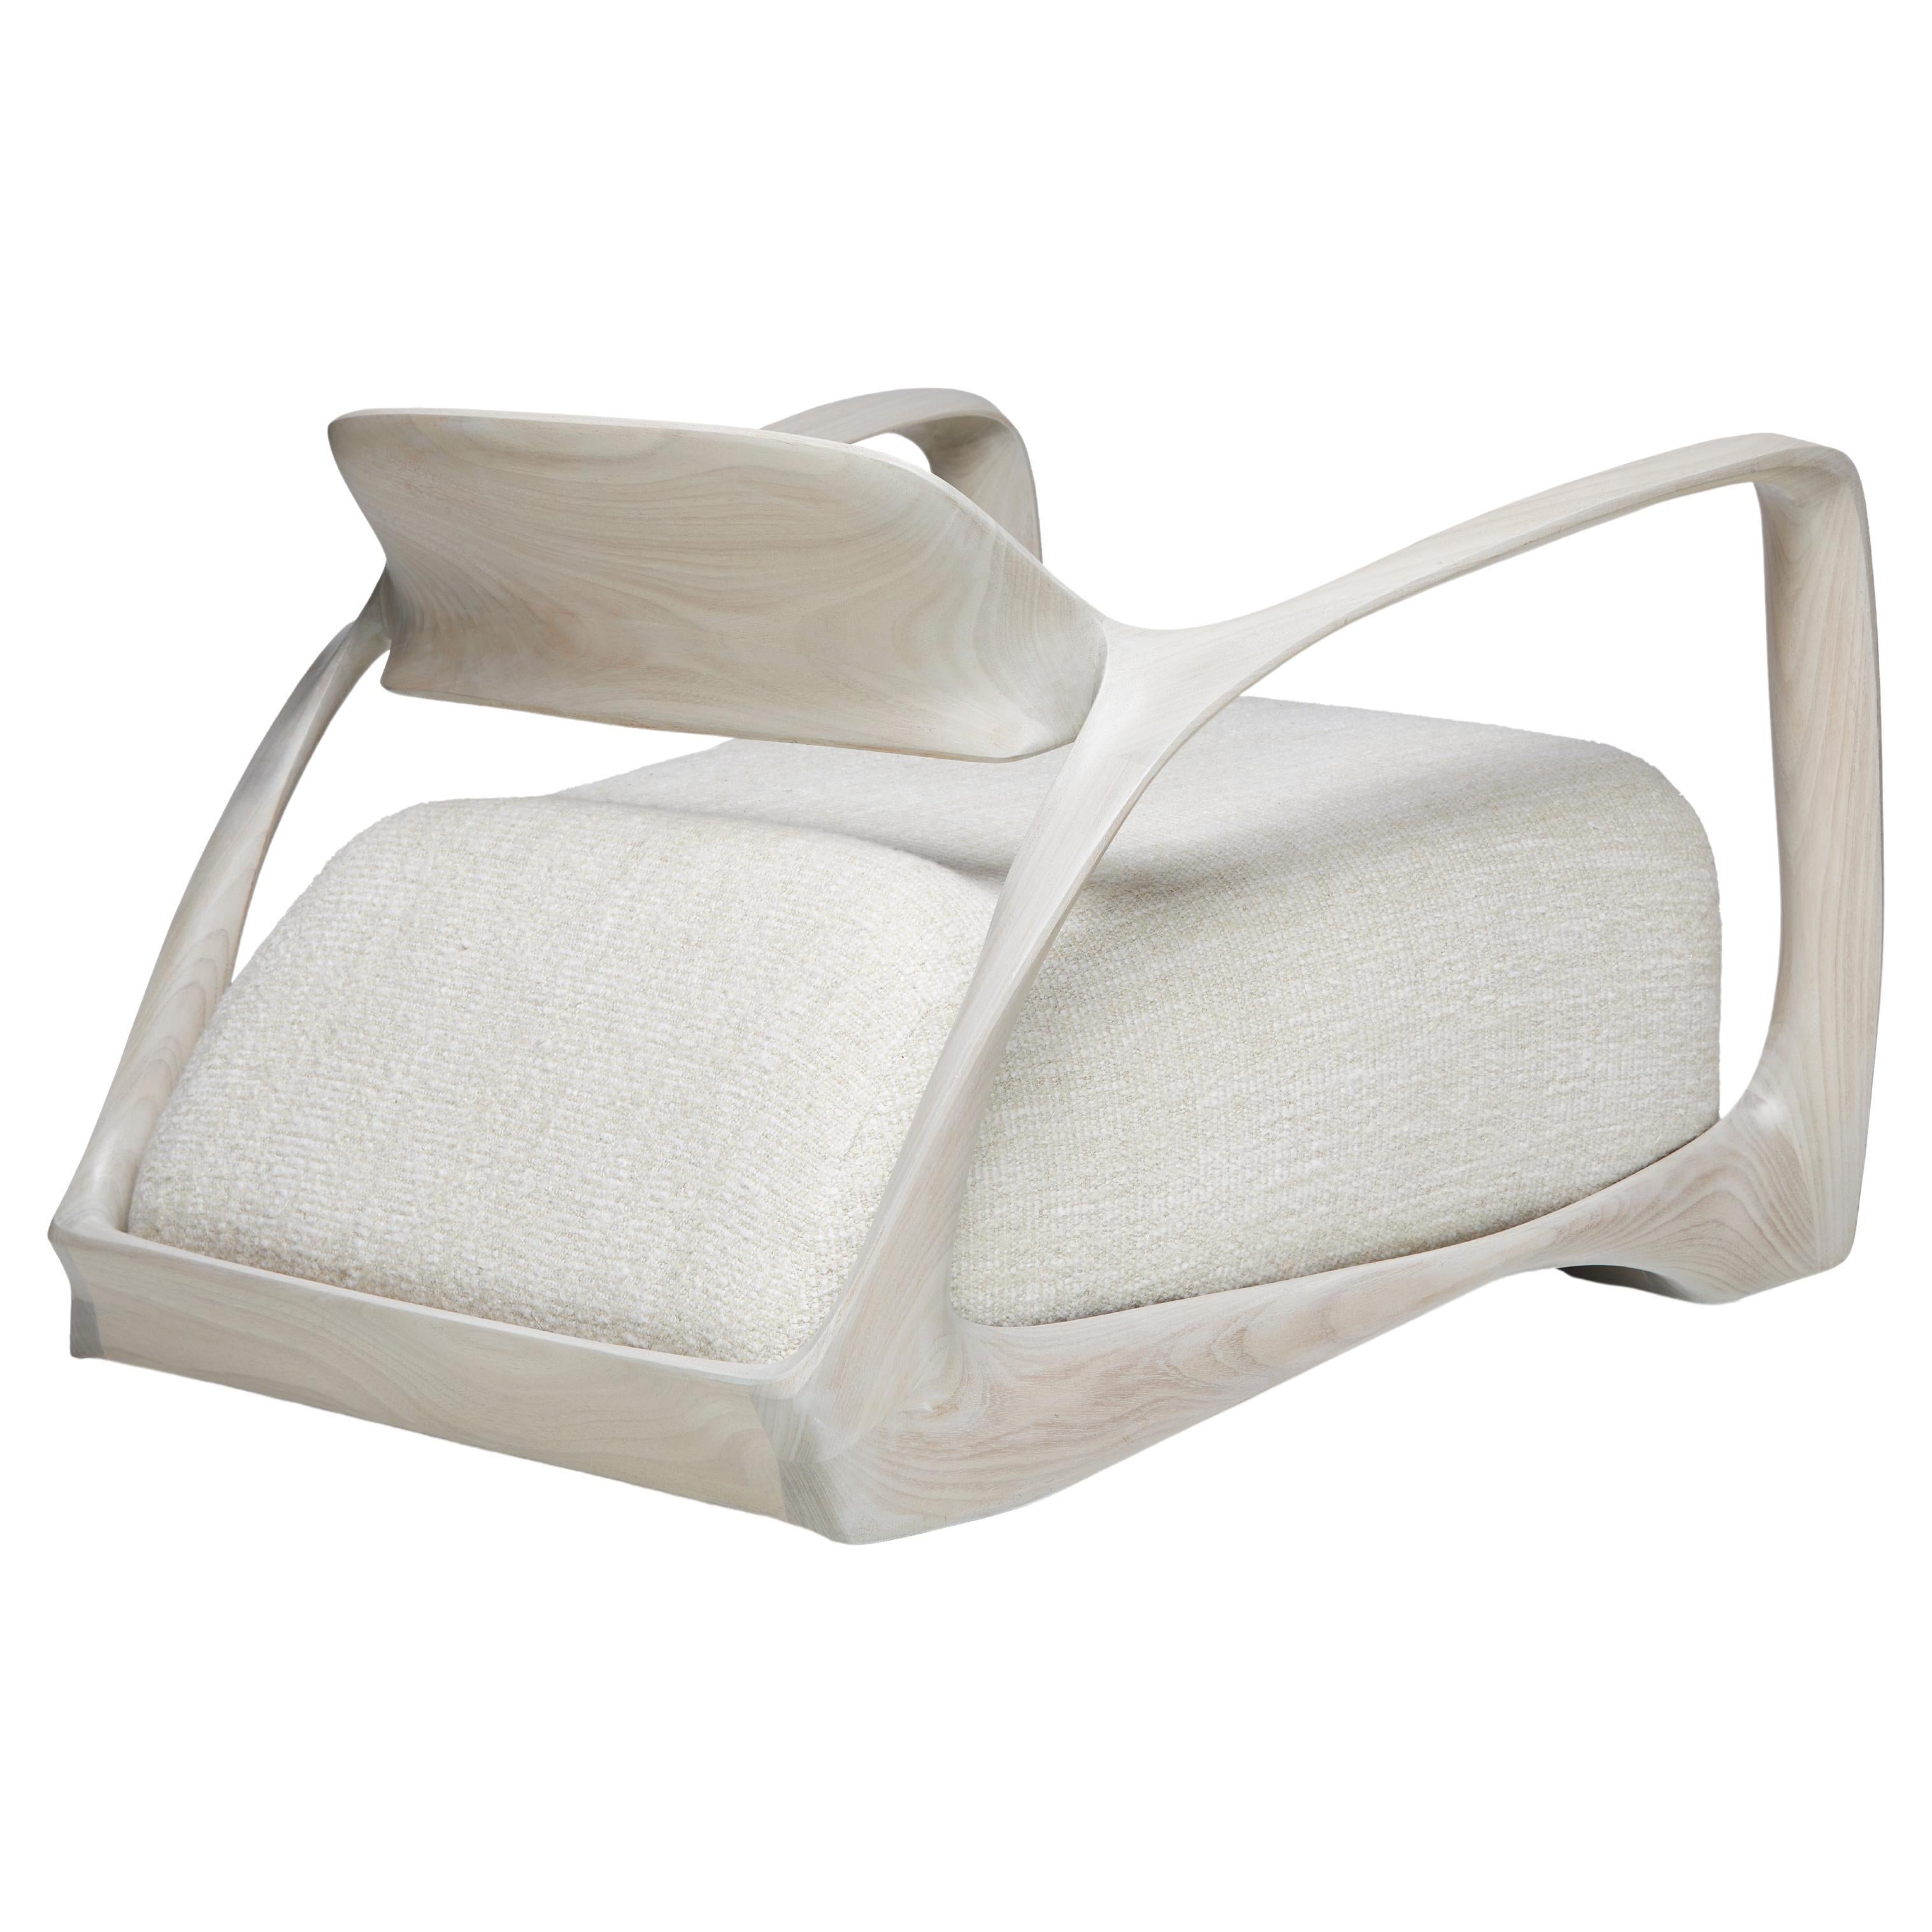 "Model 2" - Contemporary Sculptural Cerused Lounge Chair - Unique Modern Design For Sale